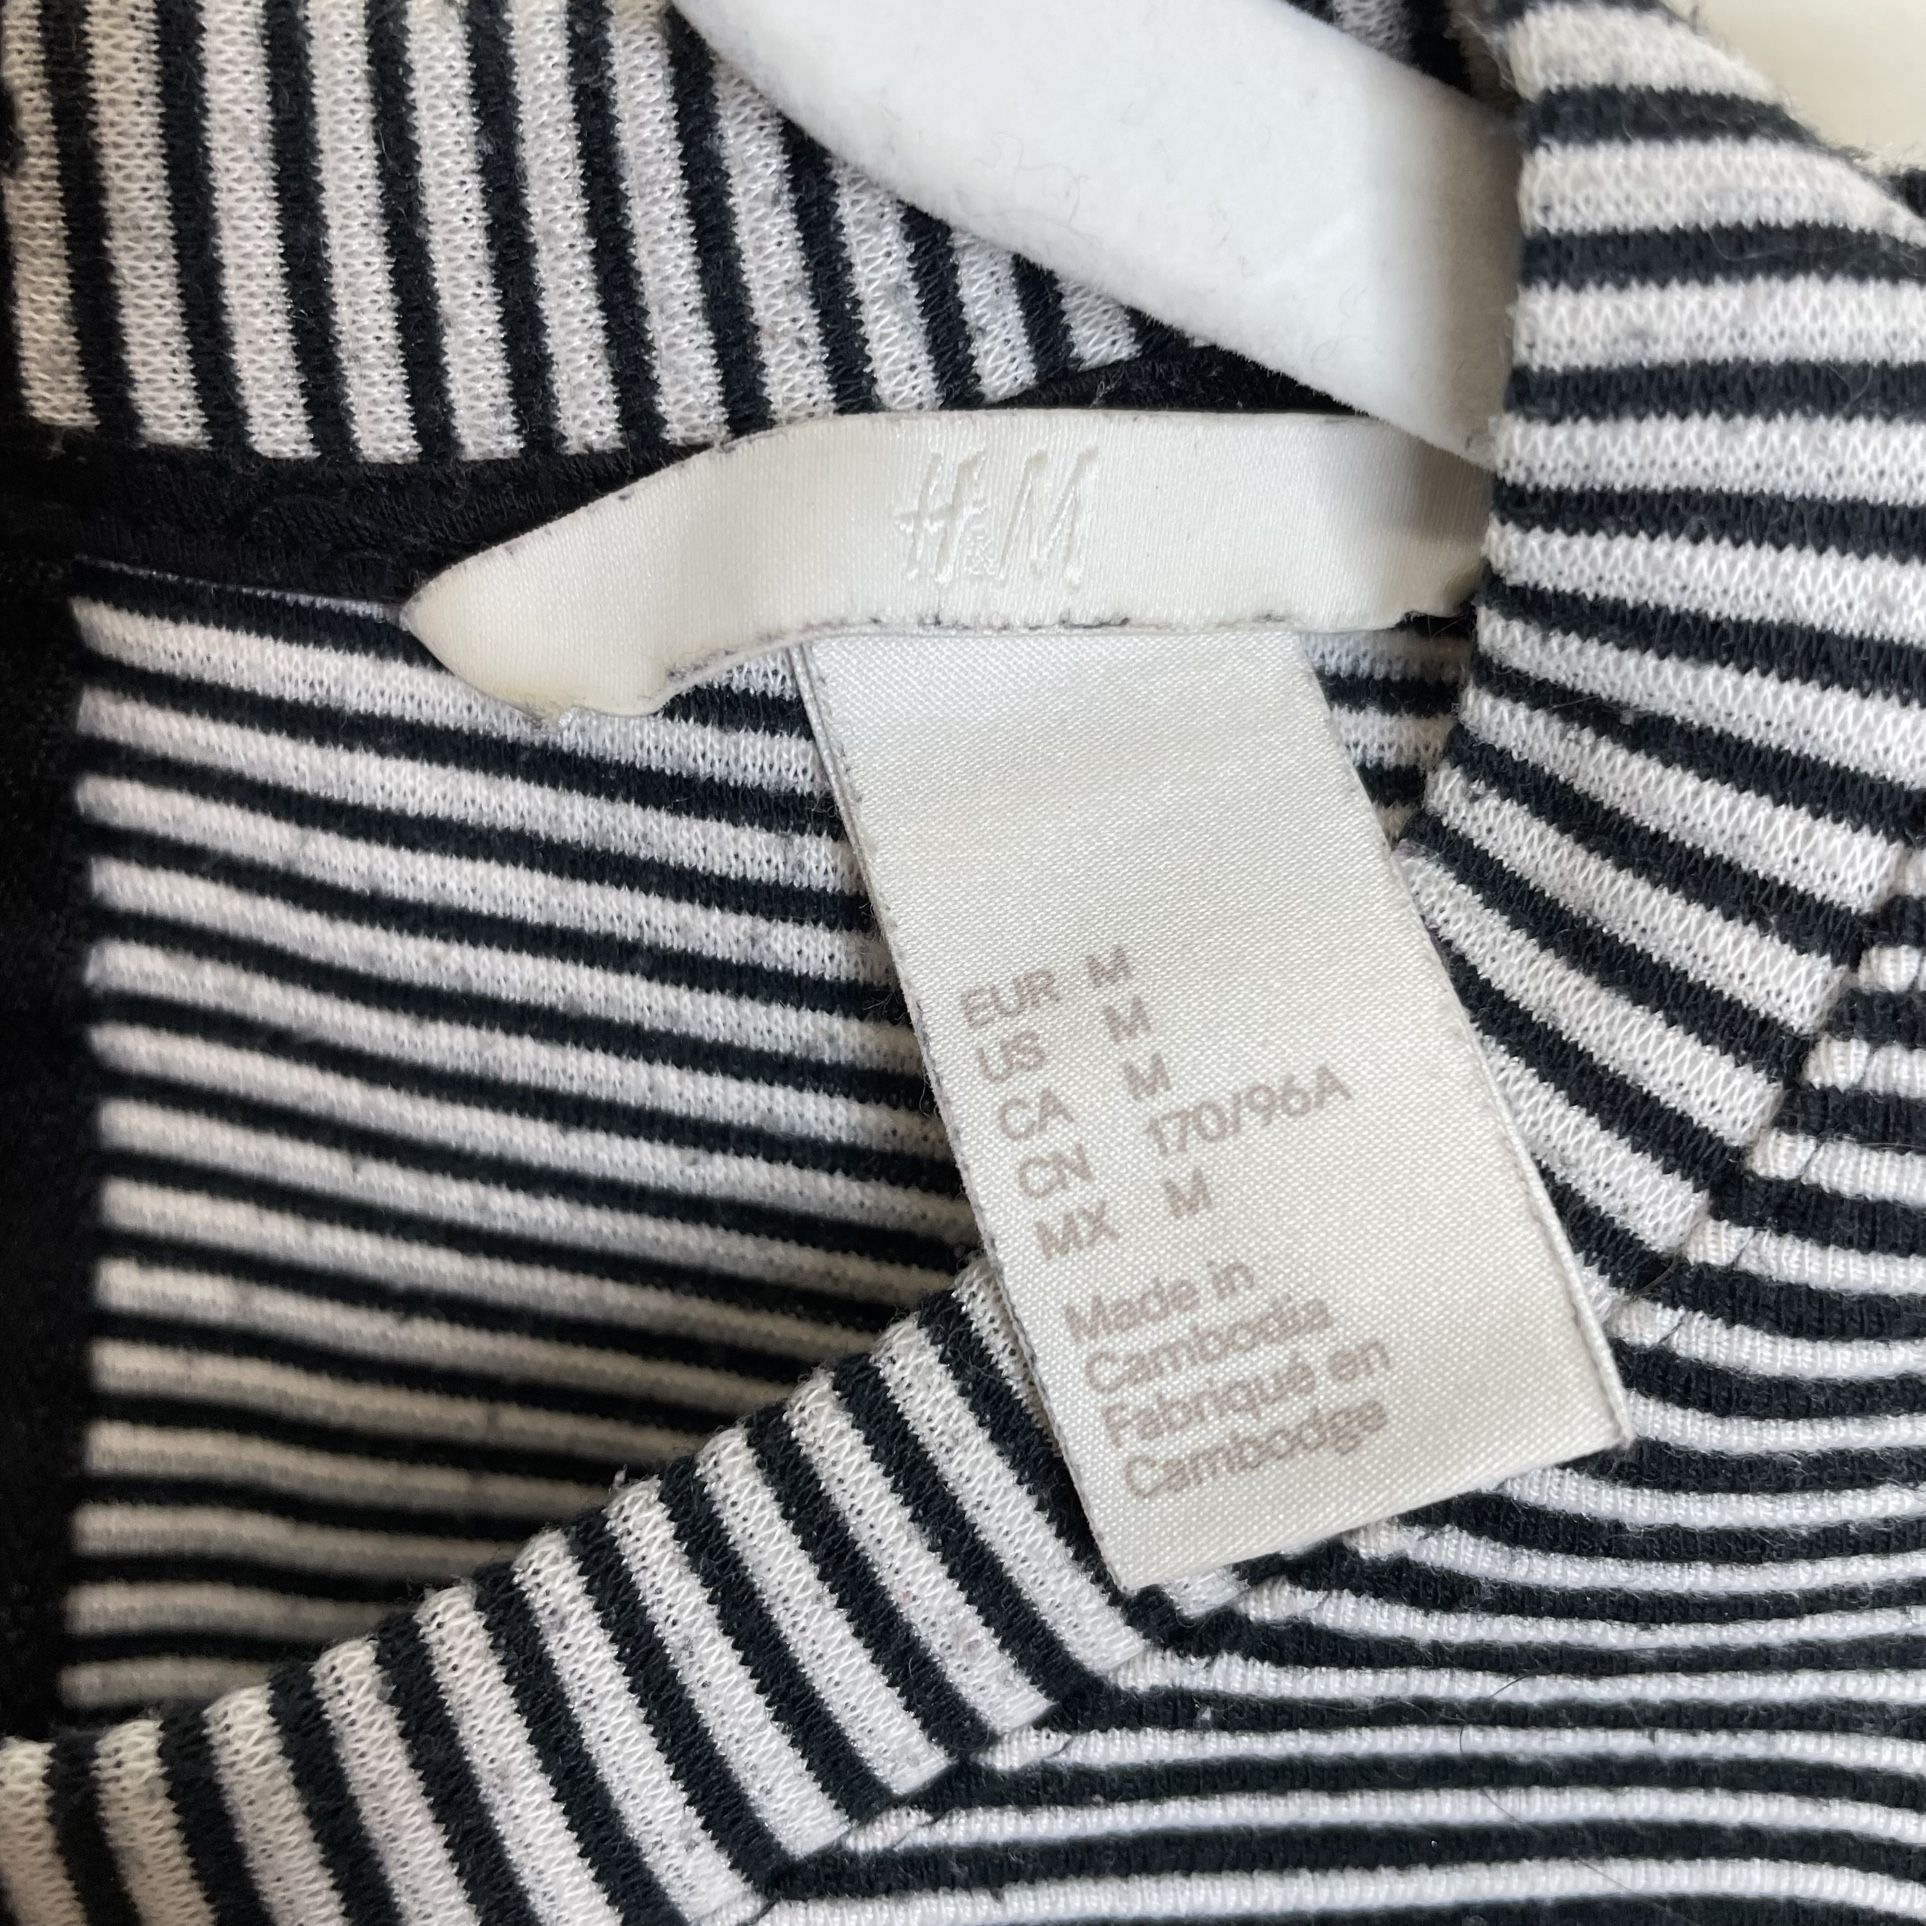 Black and White Striped H&M Dress Size Medium